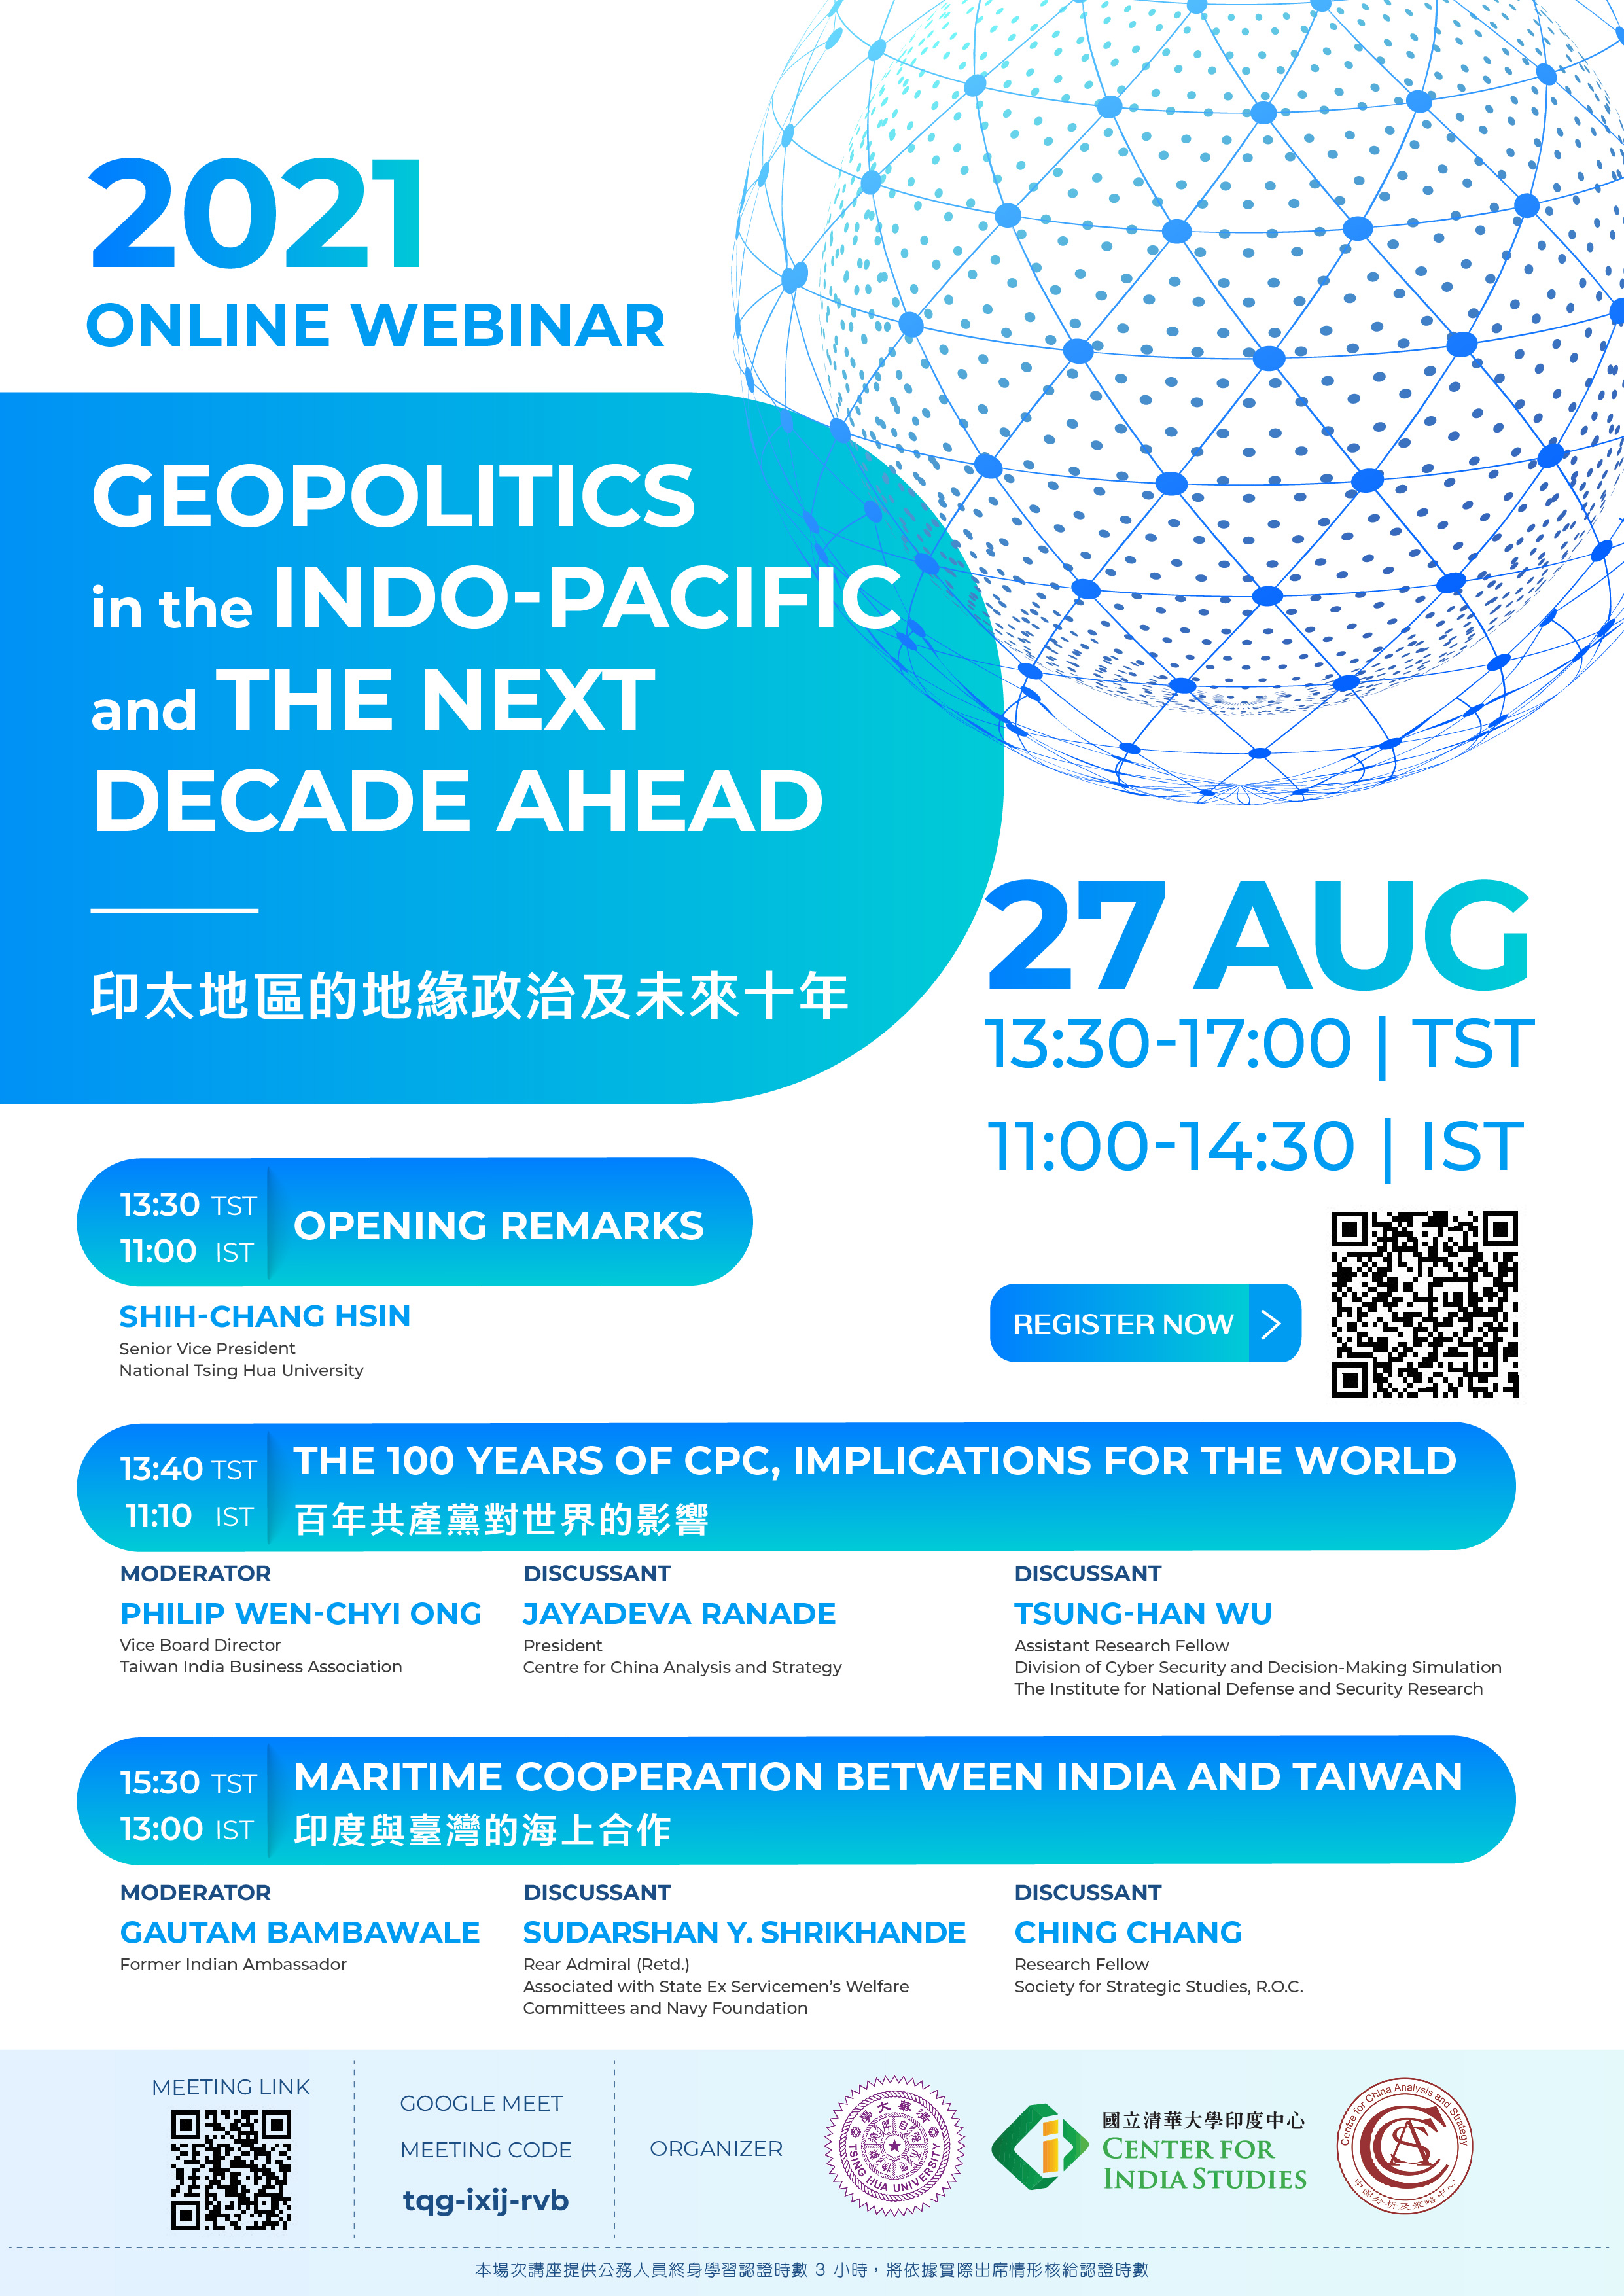 (代轉)「Geopolitics in the Indo-Pacific and the next decade ahead」（印太地區的地緣政治及未來十年）網路研討會